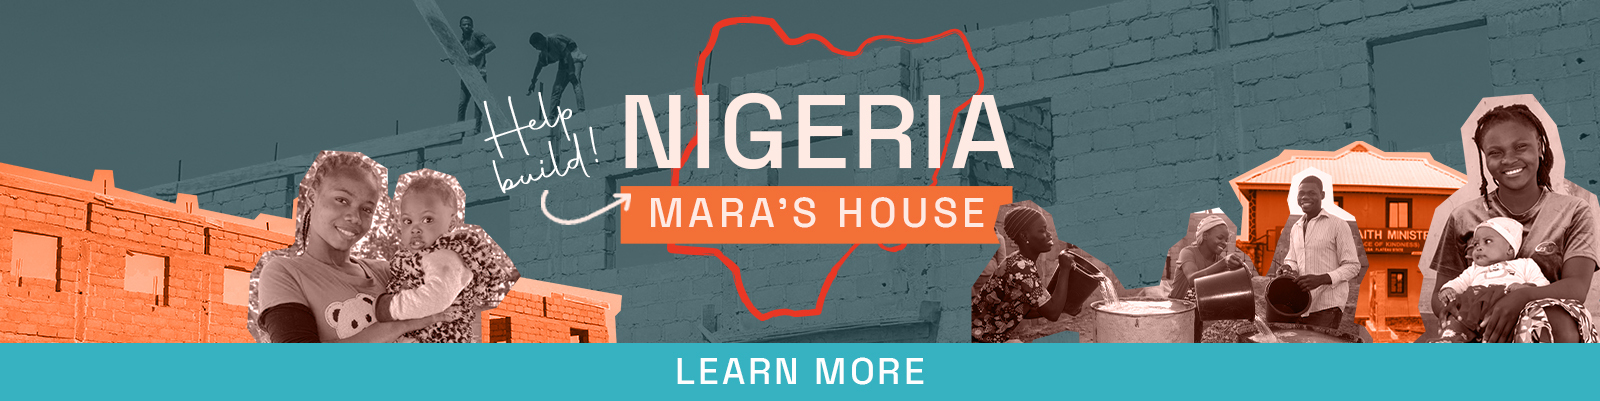 Nigeria - Mara's House